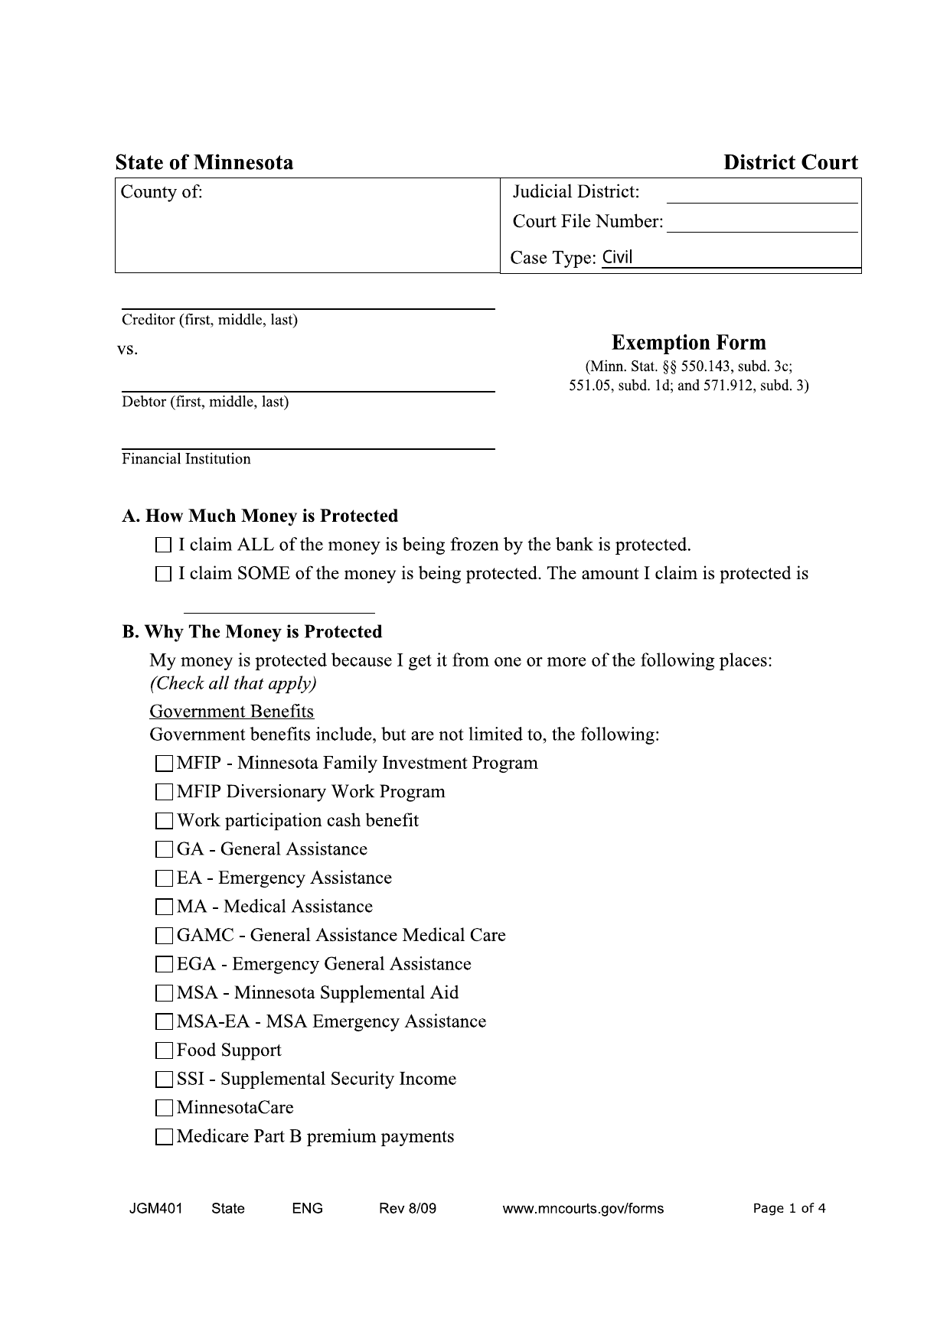 Form JGM401 Exemption Form - Minnesota, Page 1